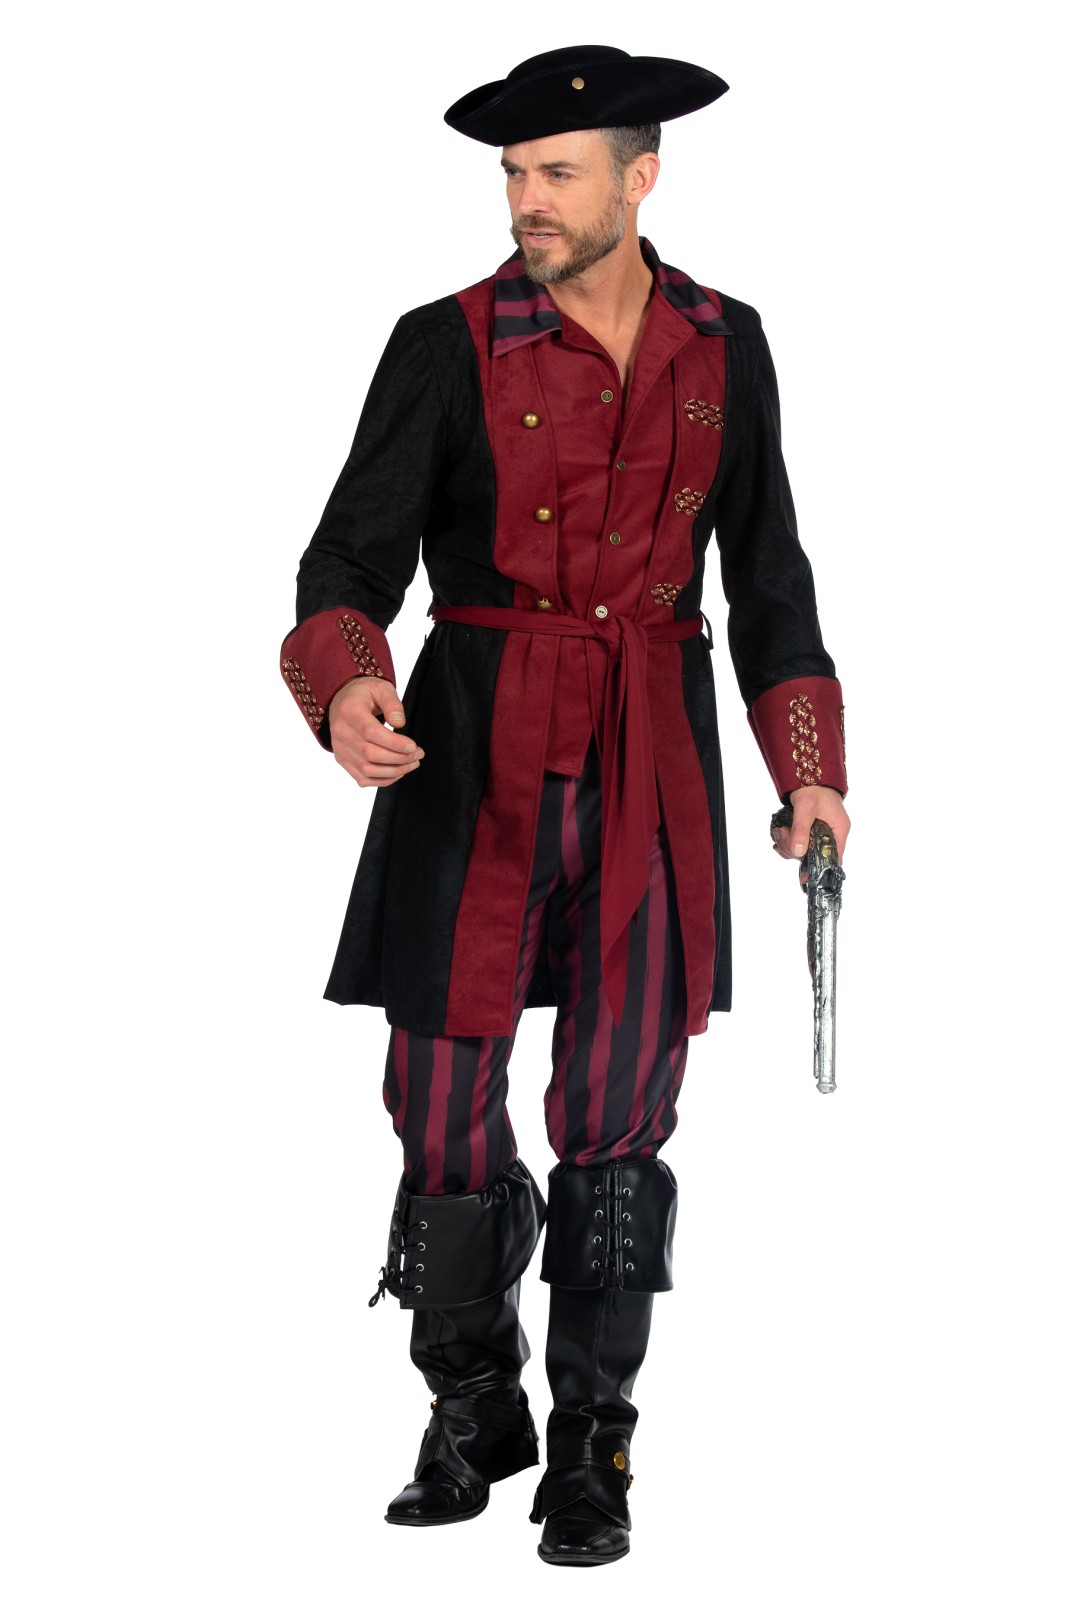 Piraten kostuum burgundy-zwart heren